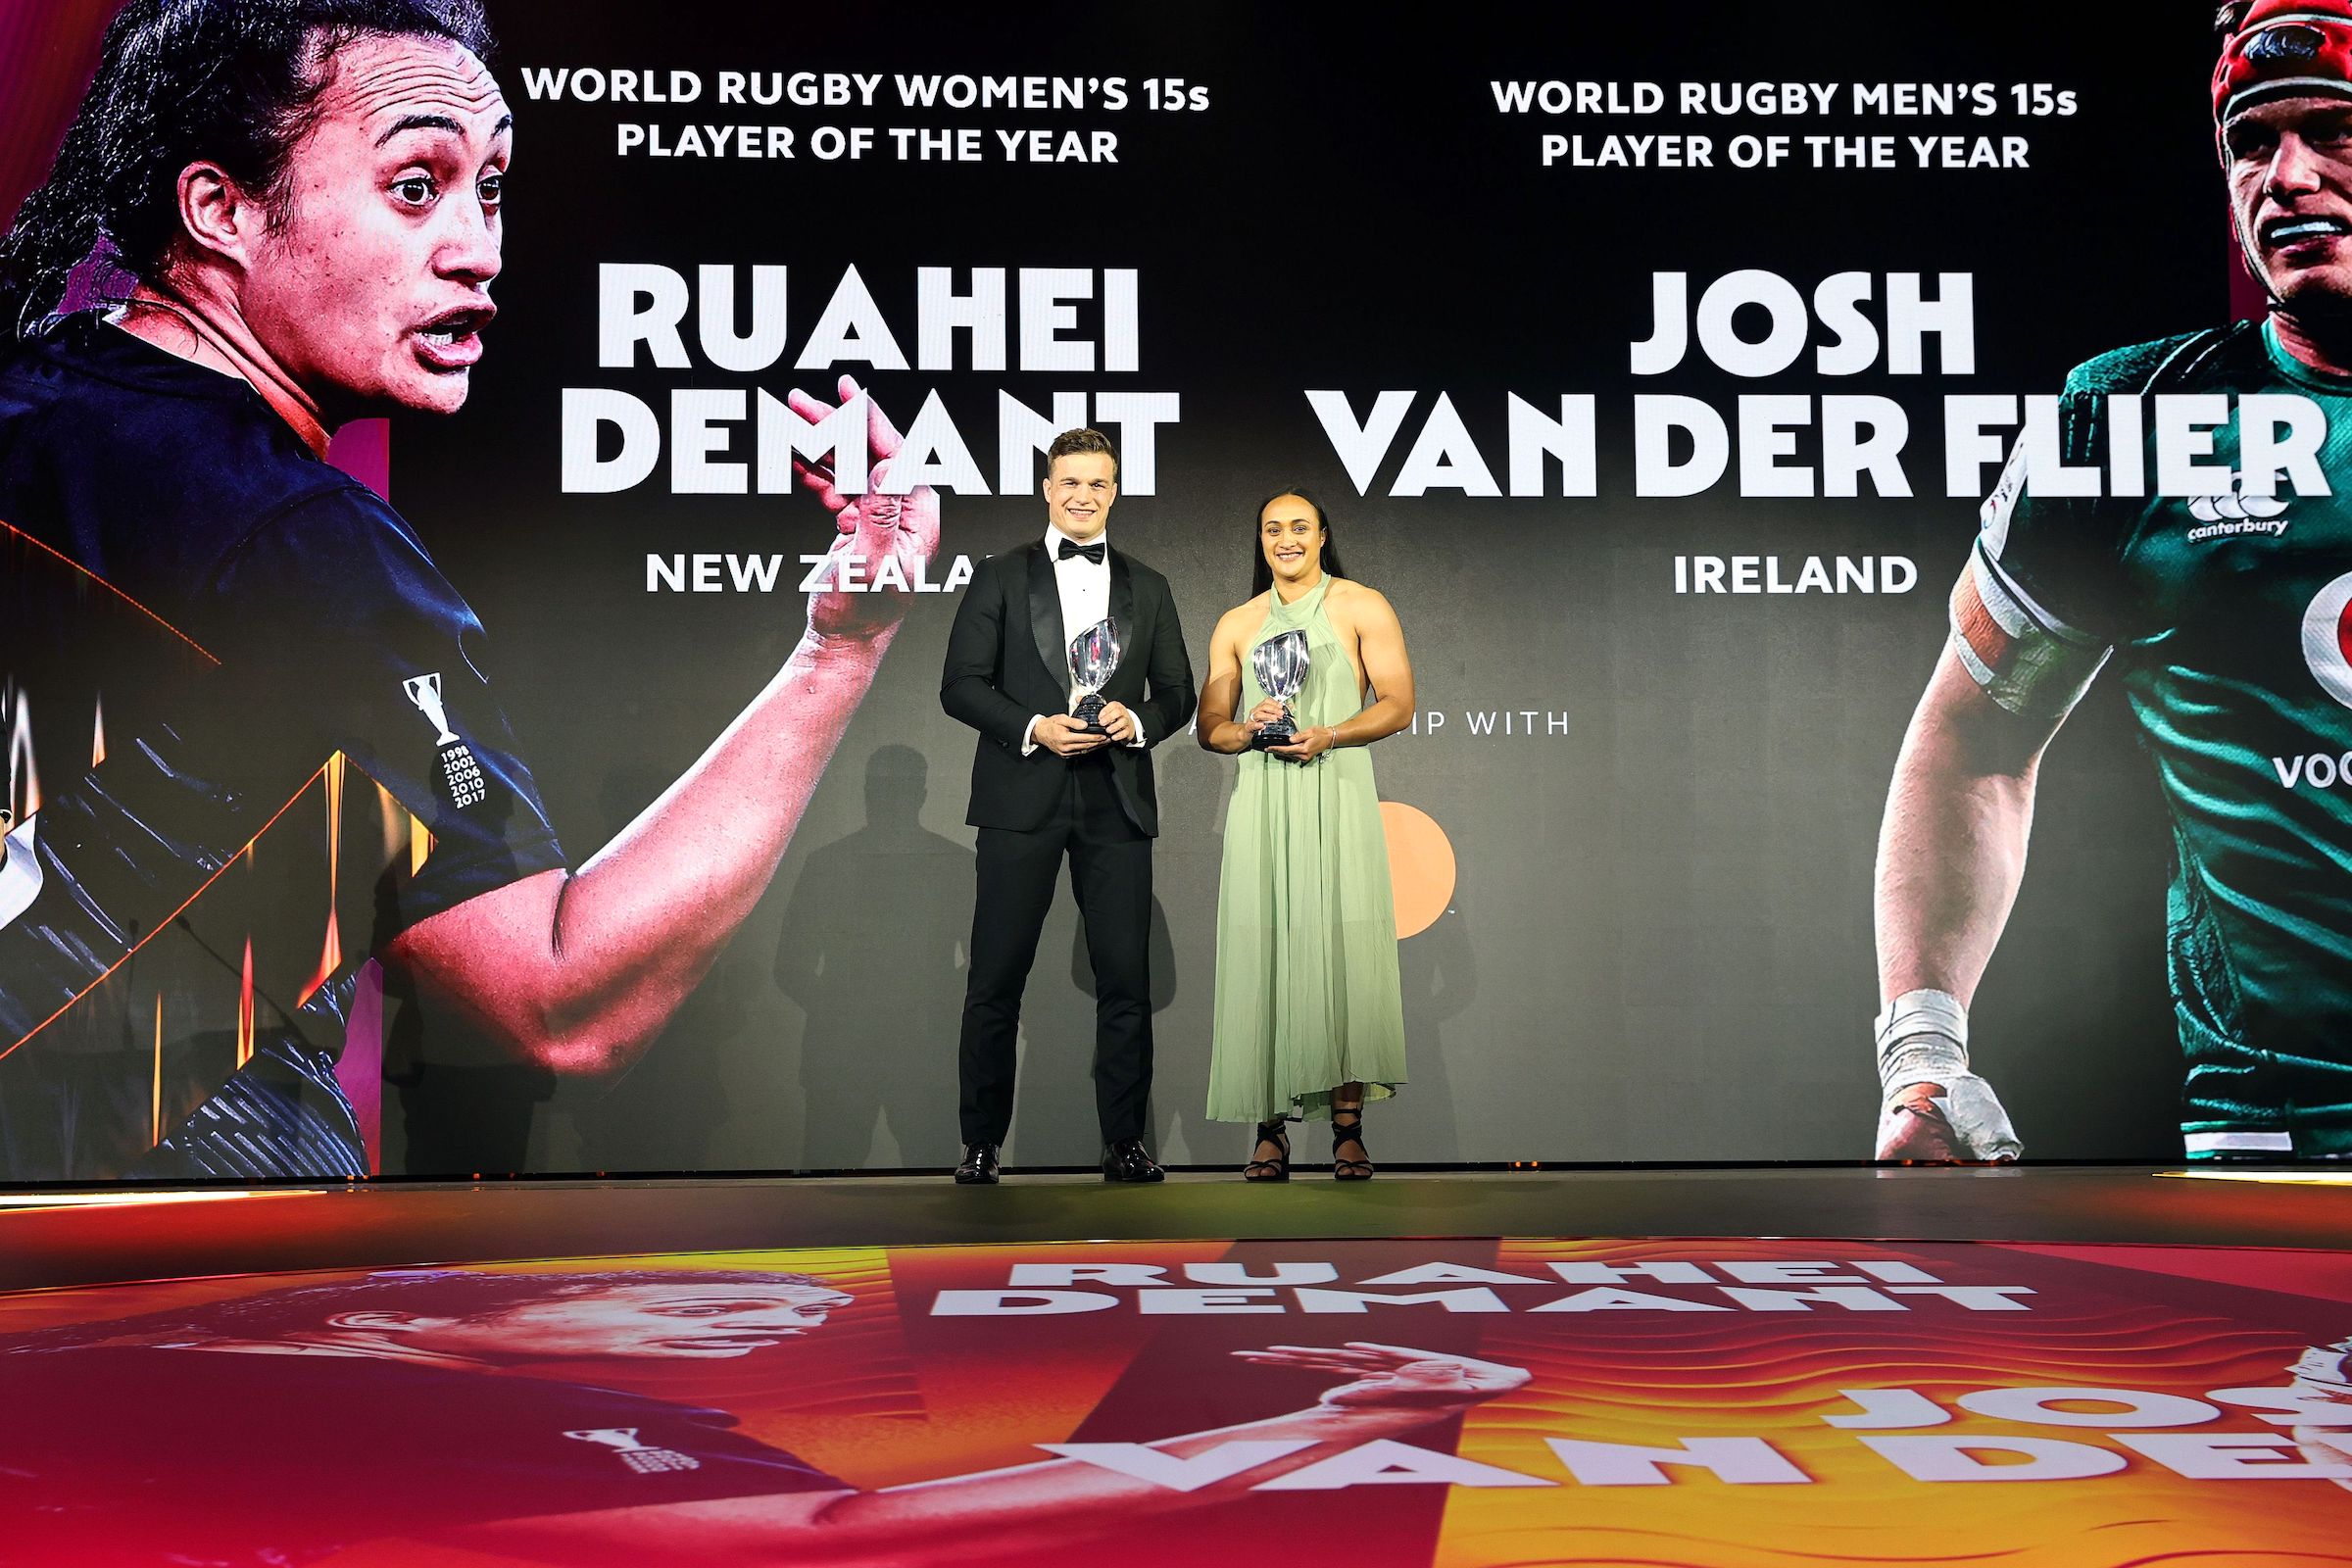 World rugby players of the year 2022 - josh van der flier (ireland) and ruahei demant (new zealand)